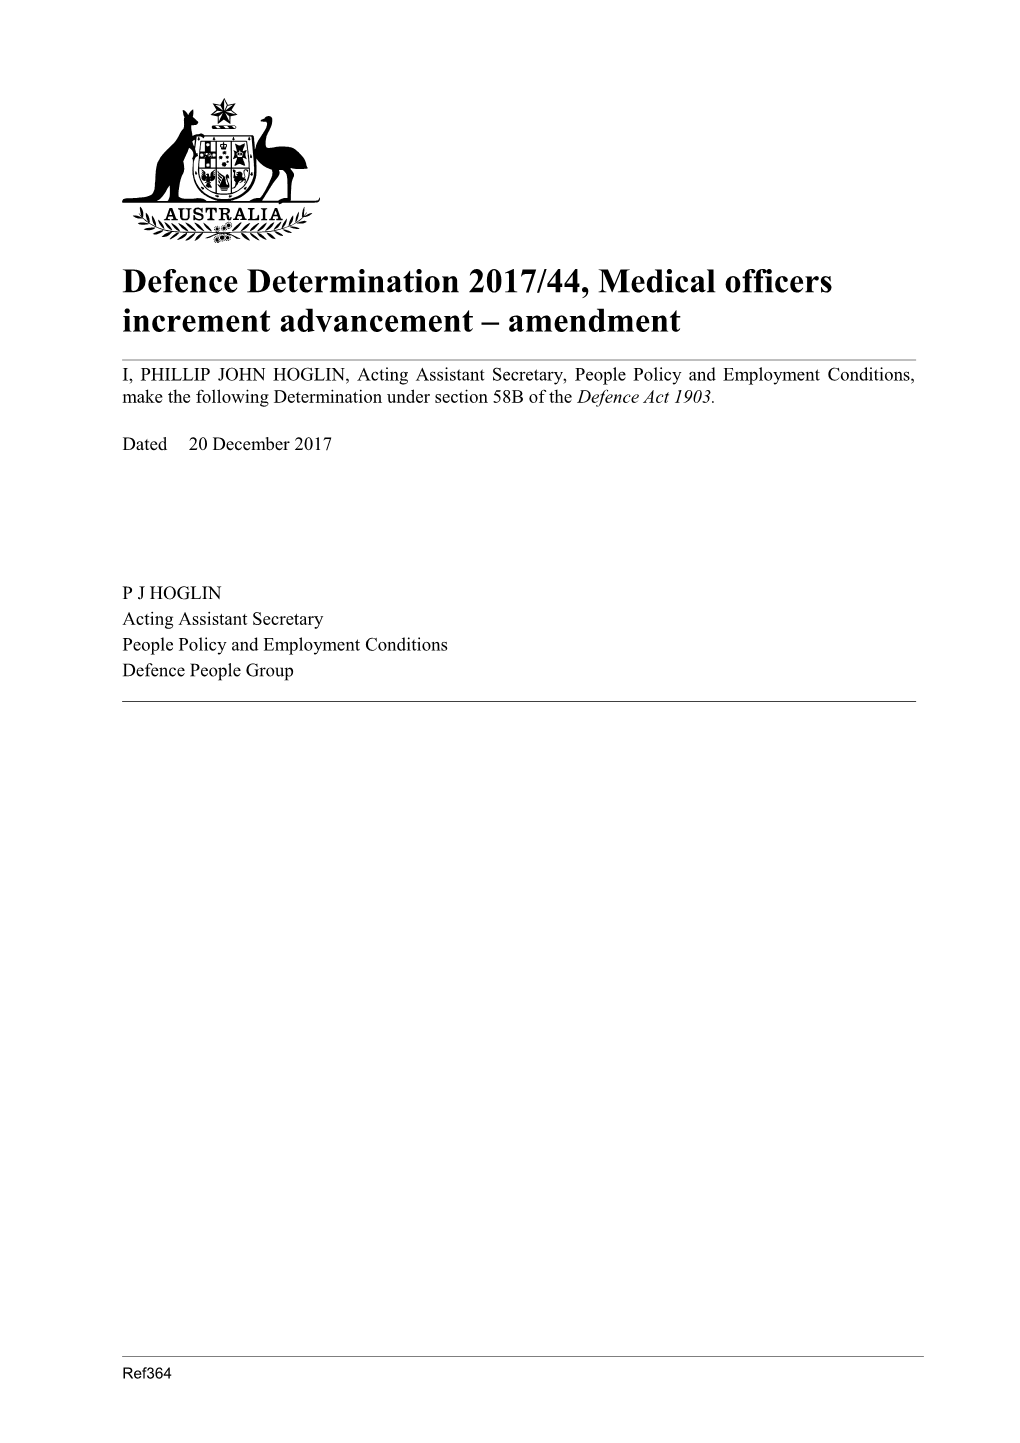 Defence Determination 2017/44, Medical Officers Increment Advancement Amendment